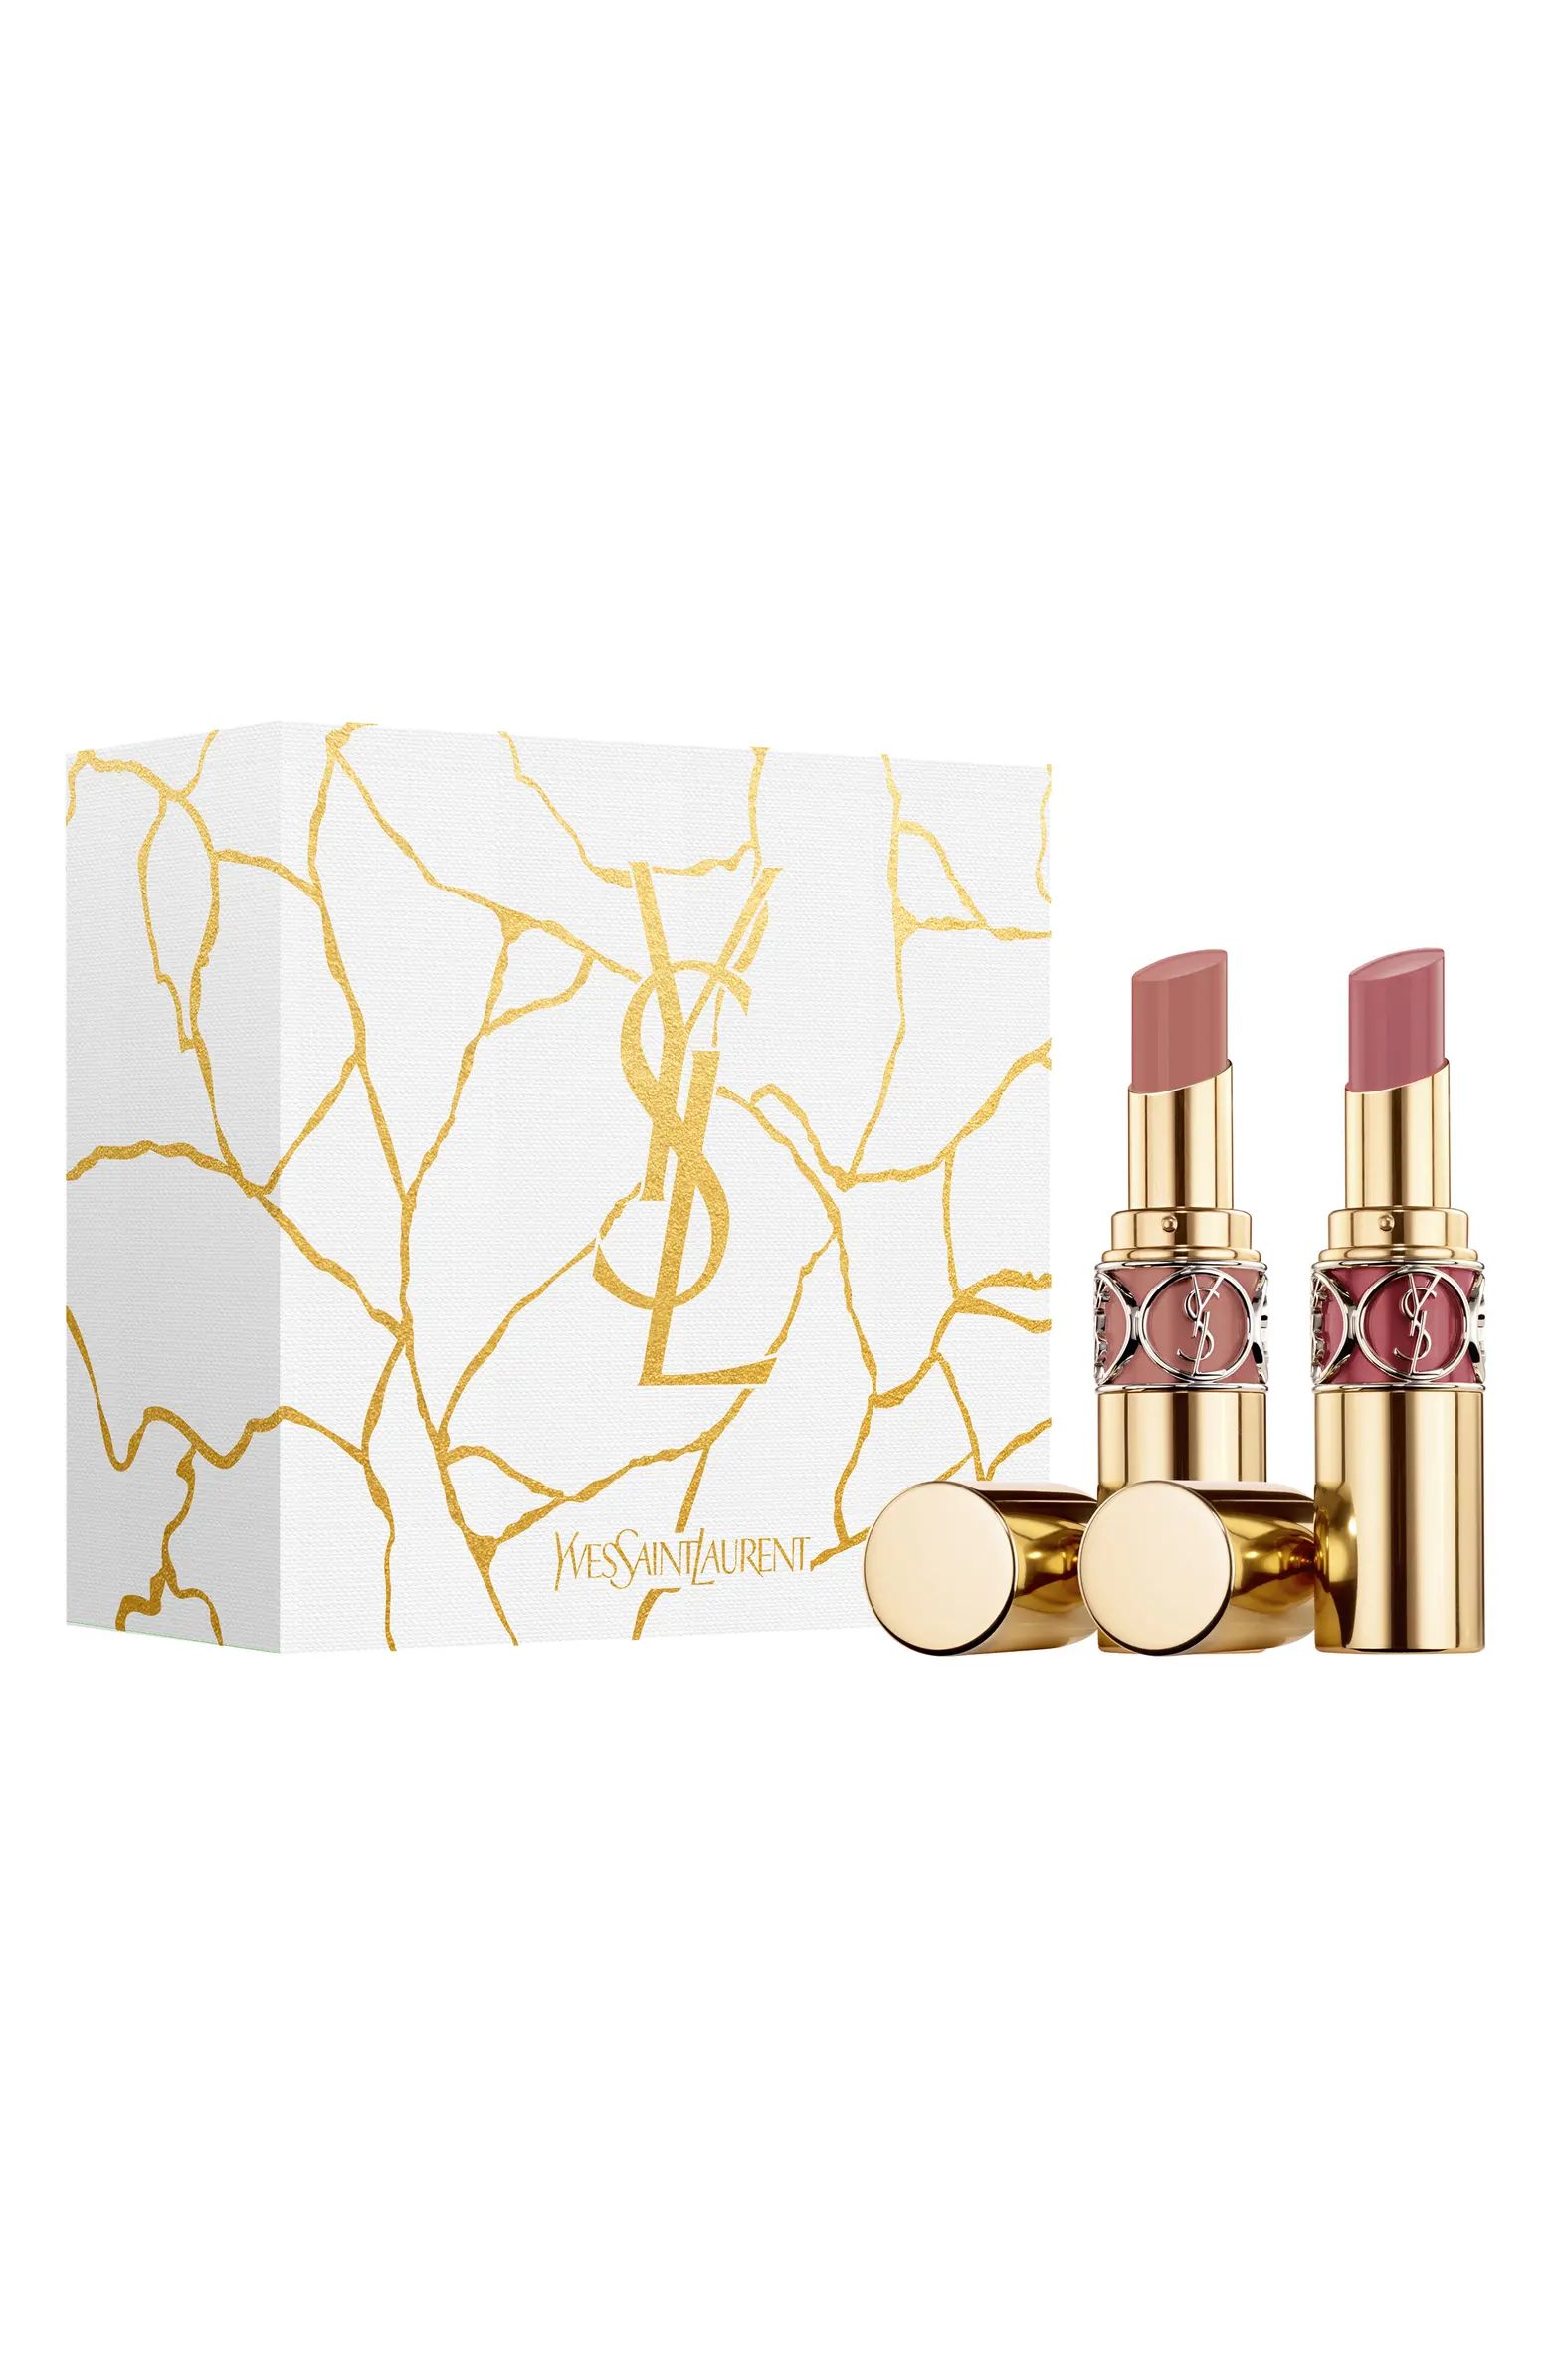 Rouge Volupté Shine Oil-in-Stick Lipstick Balm $86 Value | Nordstrom